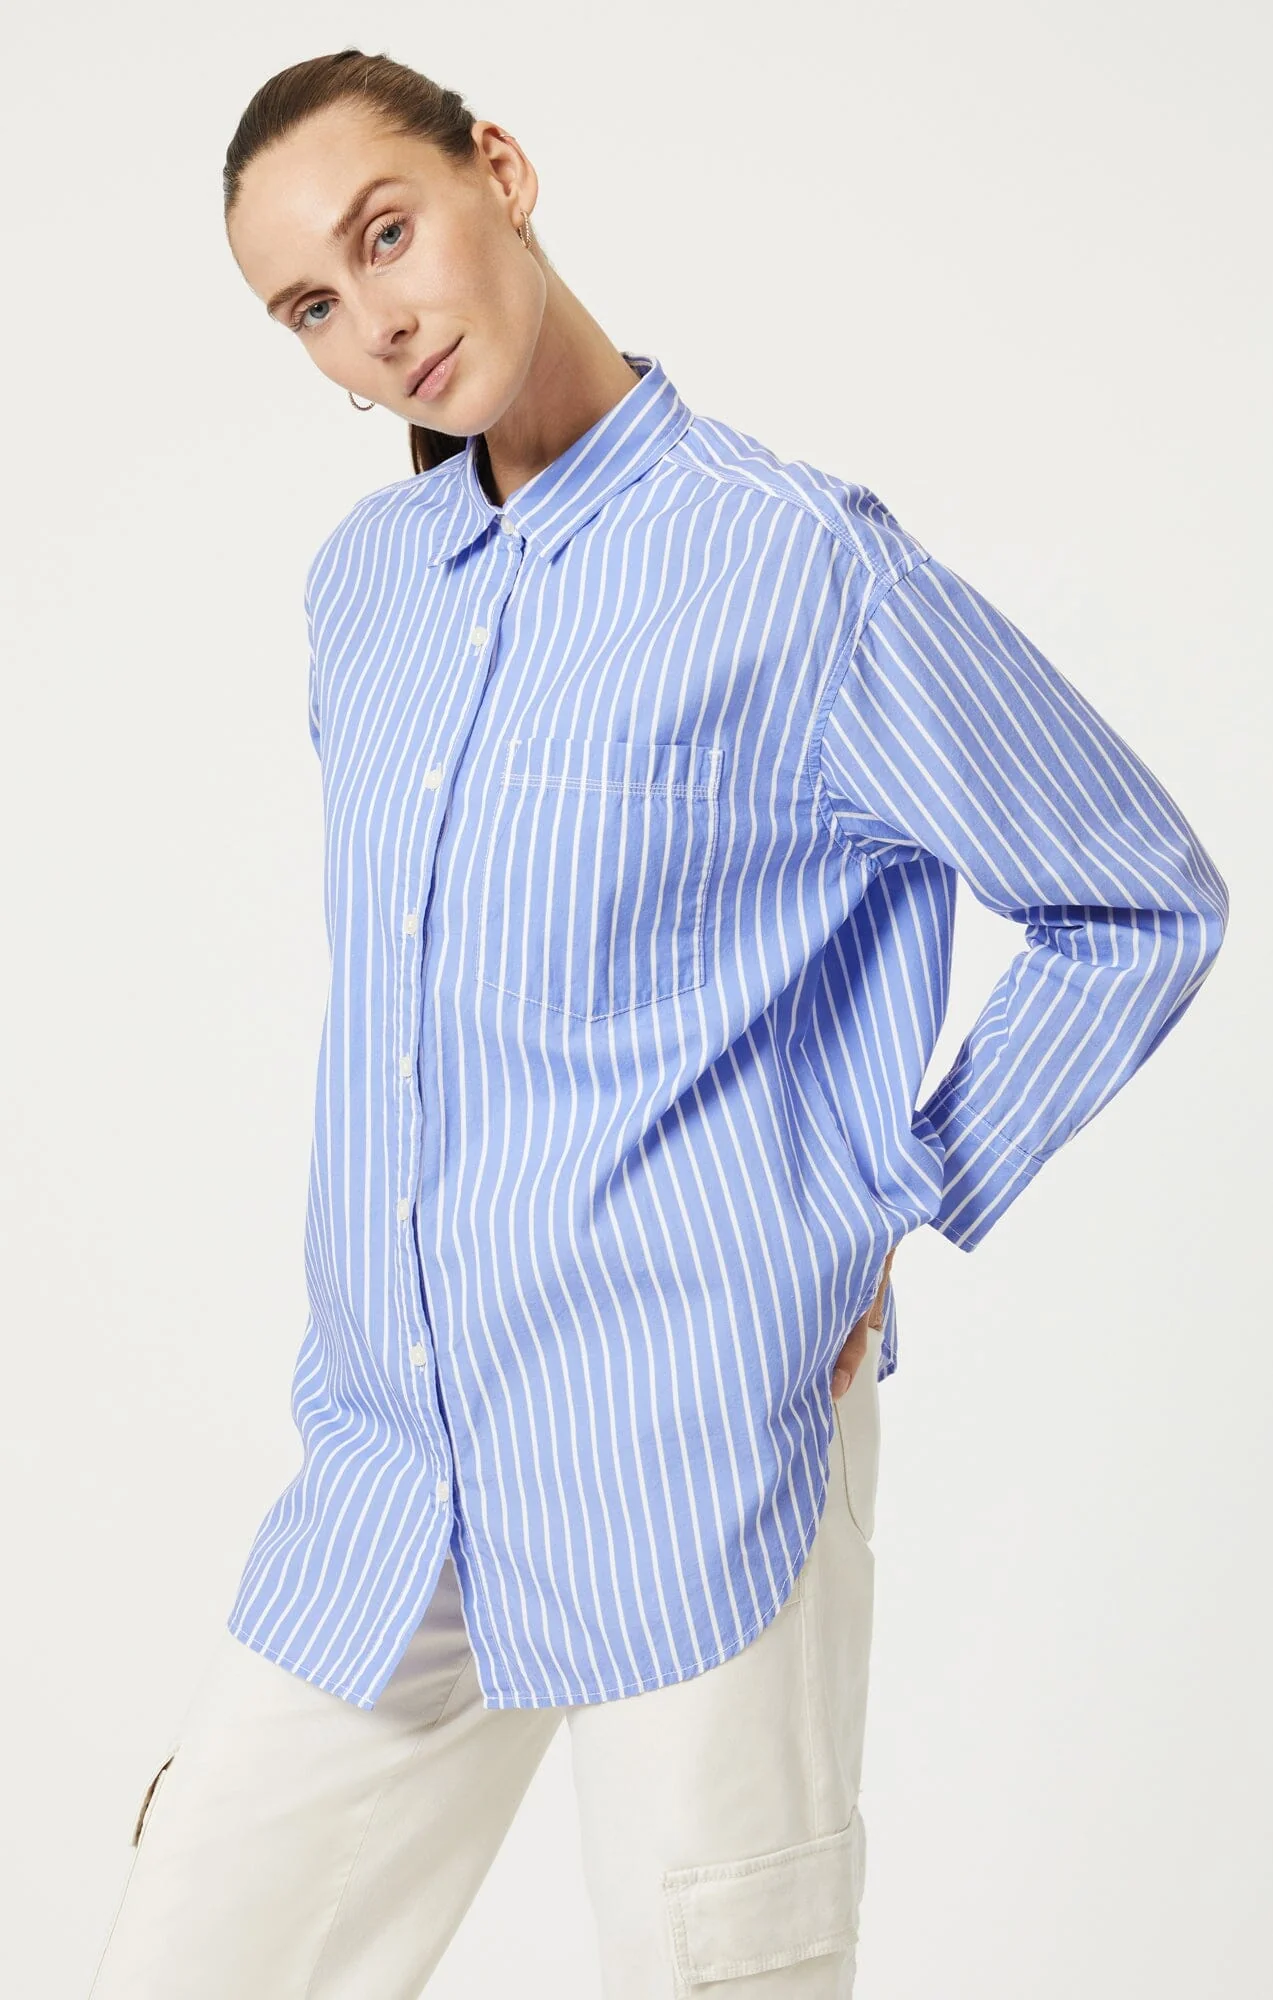 Tress Long Sleeve Shirt profile buttoned